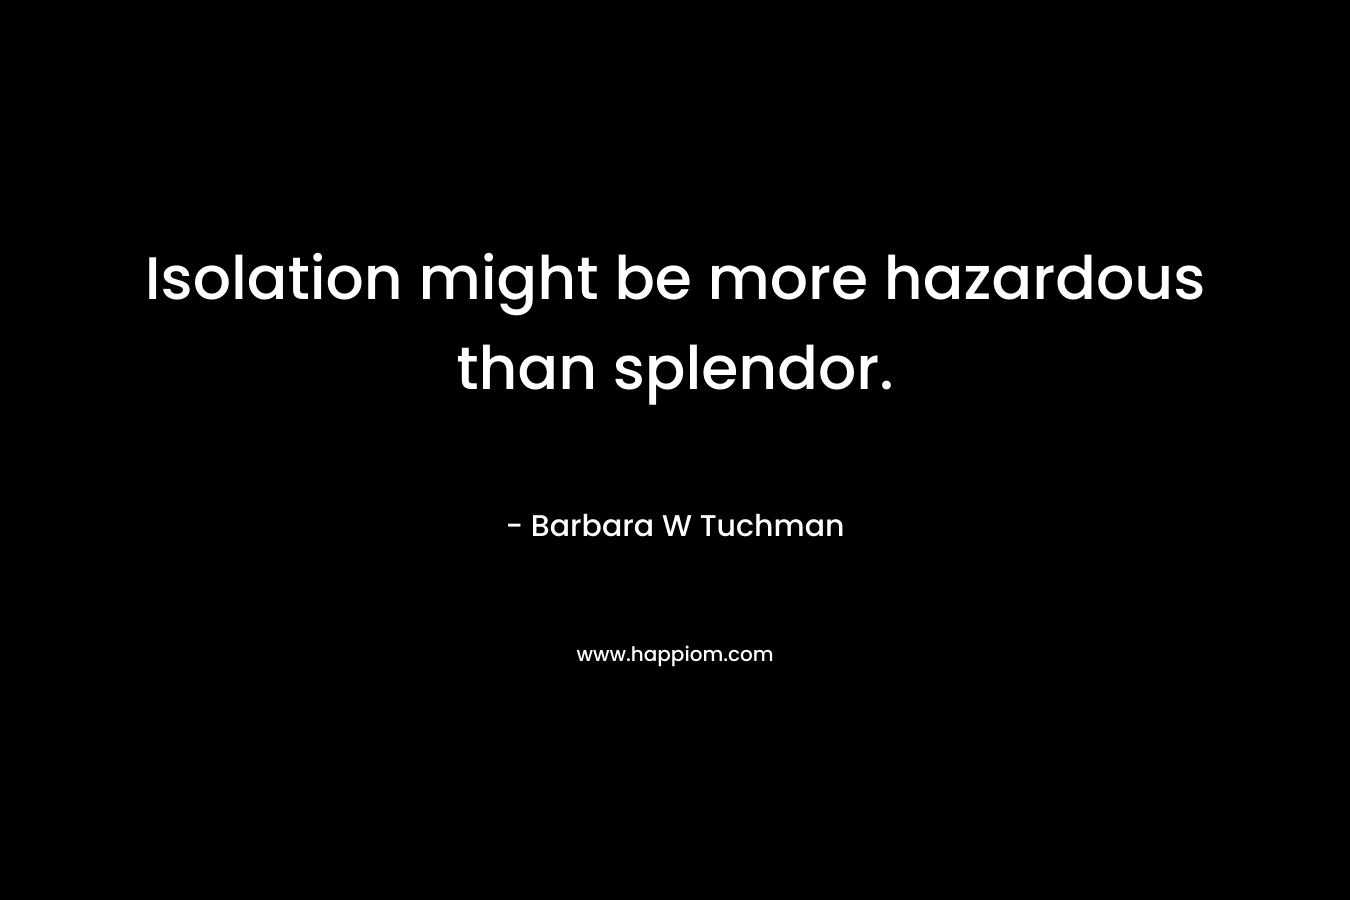 Isolation might be more hazardous than splendor.